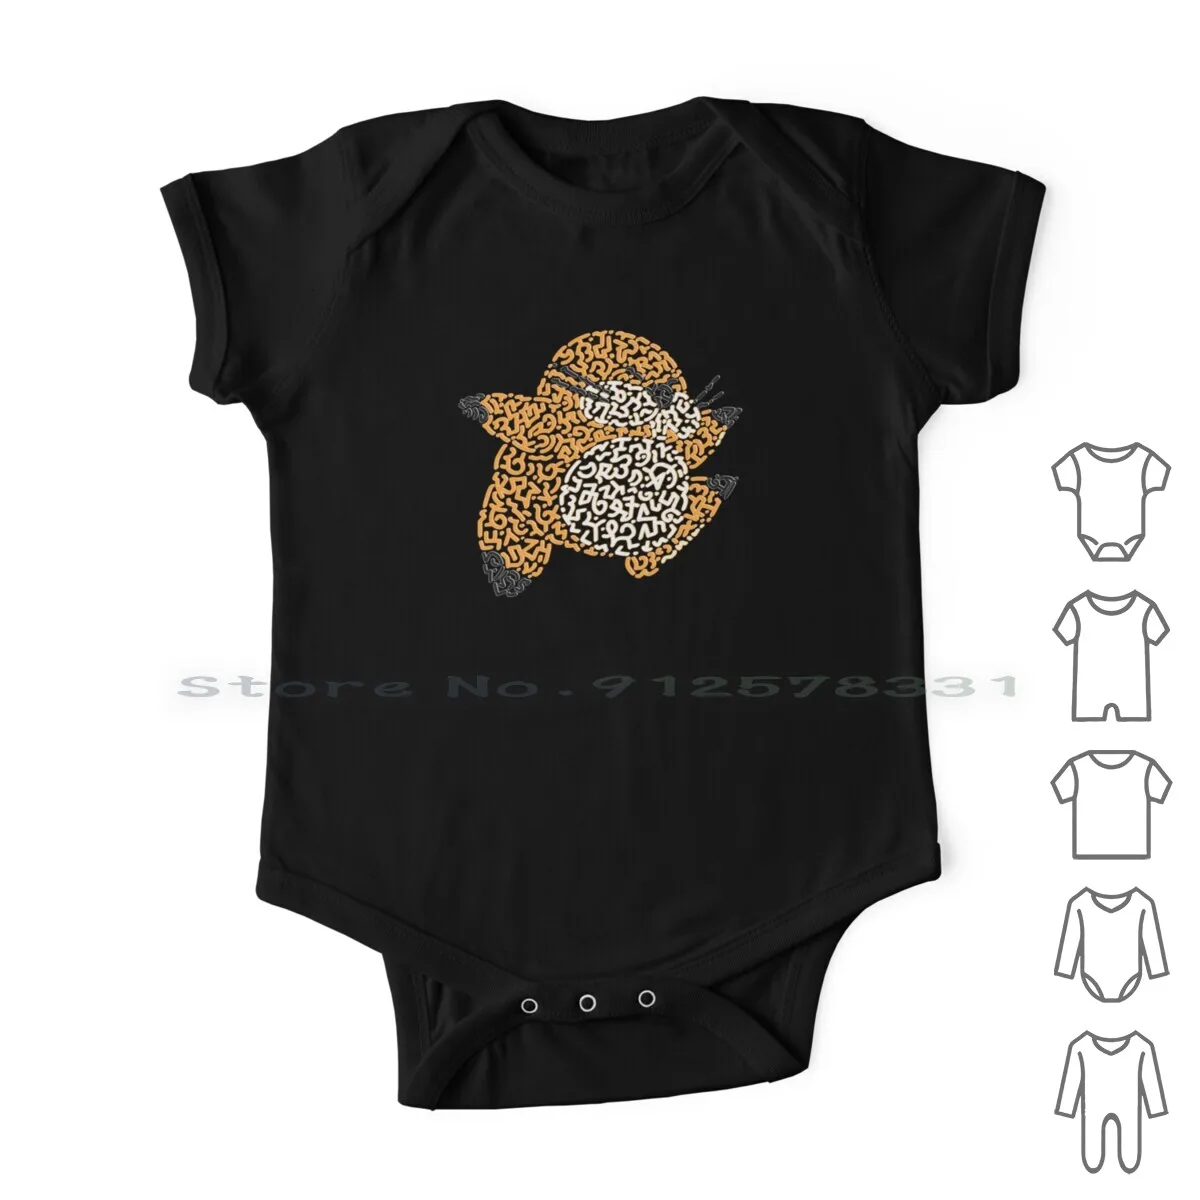 

Monty Mole Newborn Baby Clothes Rompers Cotton Jumpsuits Monty Mole Bros Super Geek Fanart Cute Funny Animal Graphic Patterns